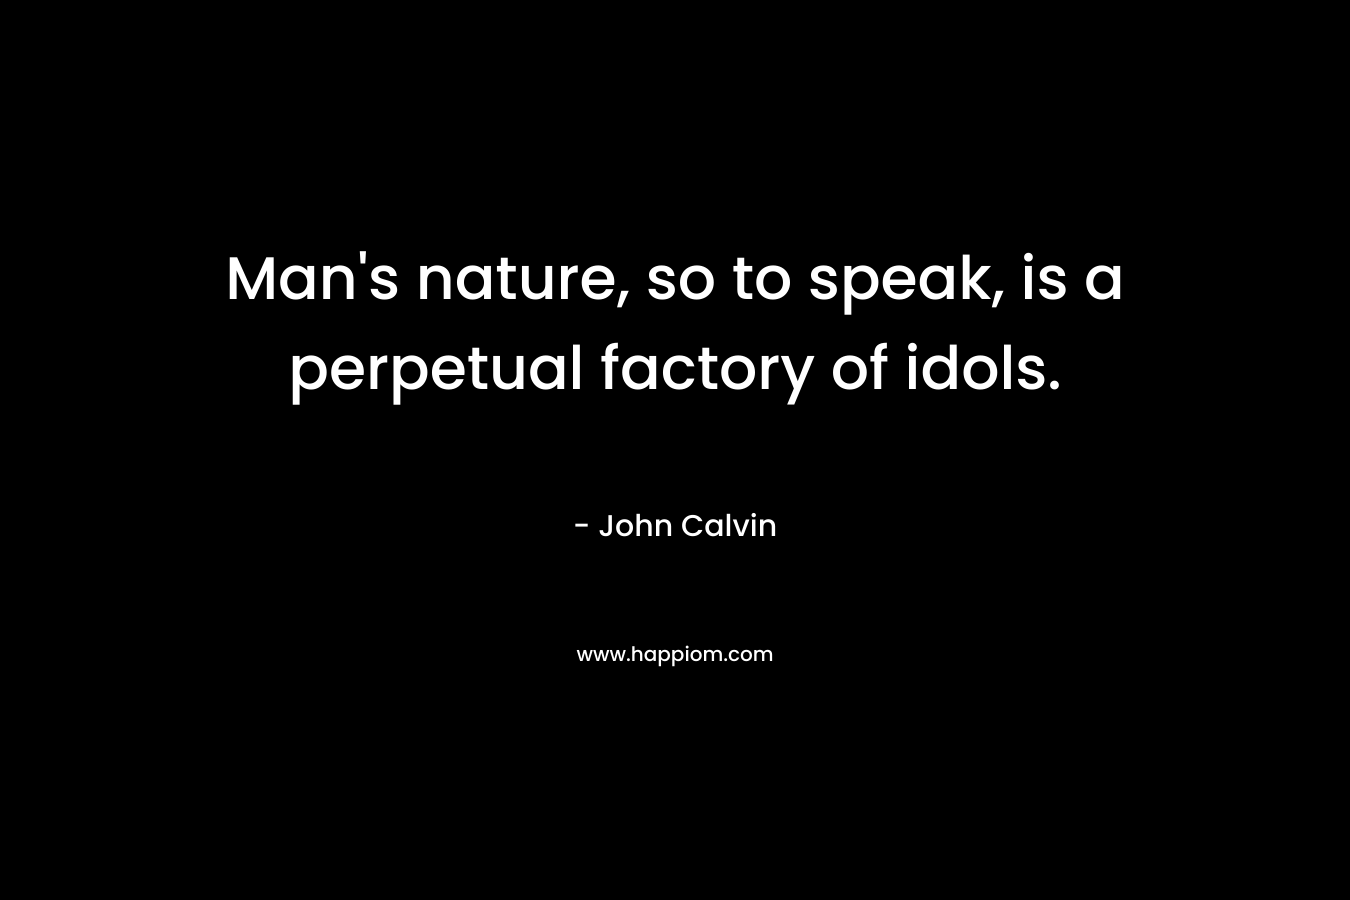 Man’s nature, so to speak, is a perpetual factory of idols. – John Calvin